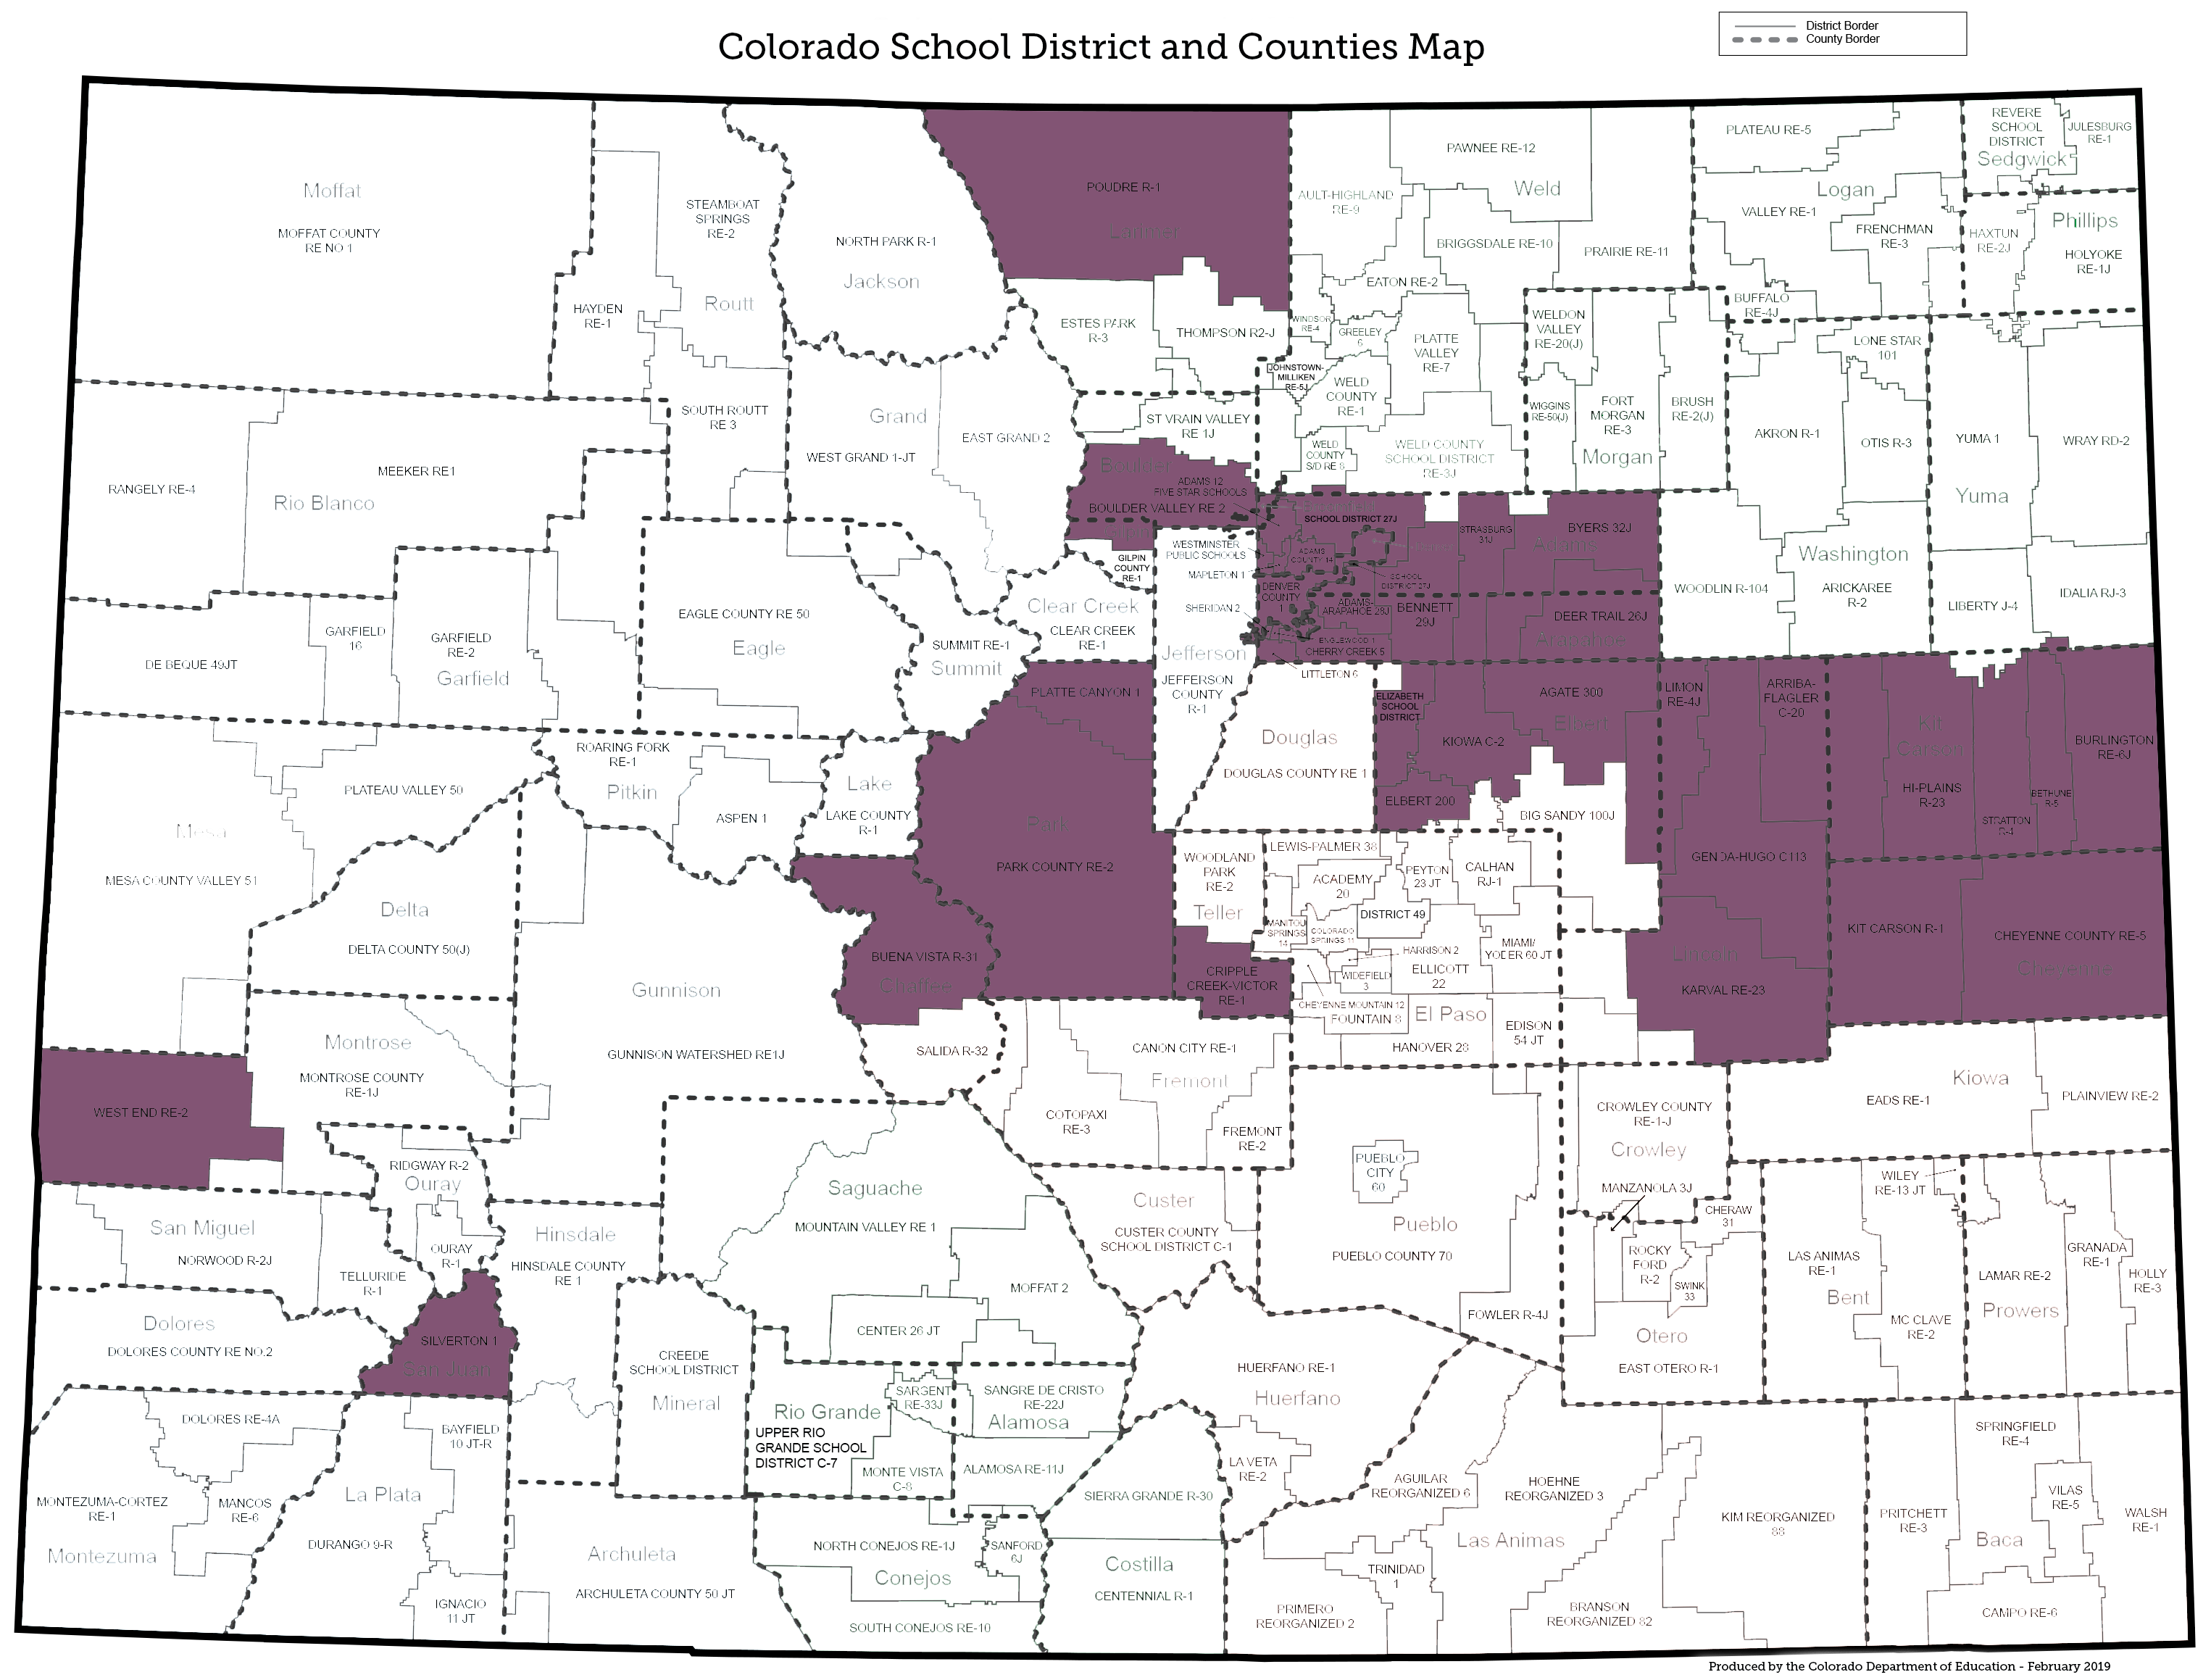 Denver and East Region Map